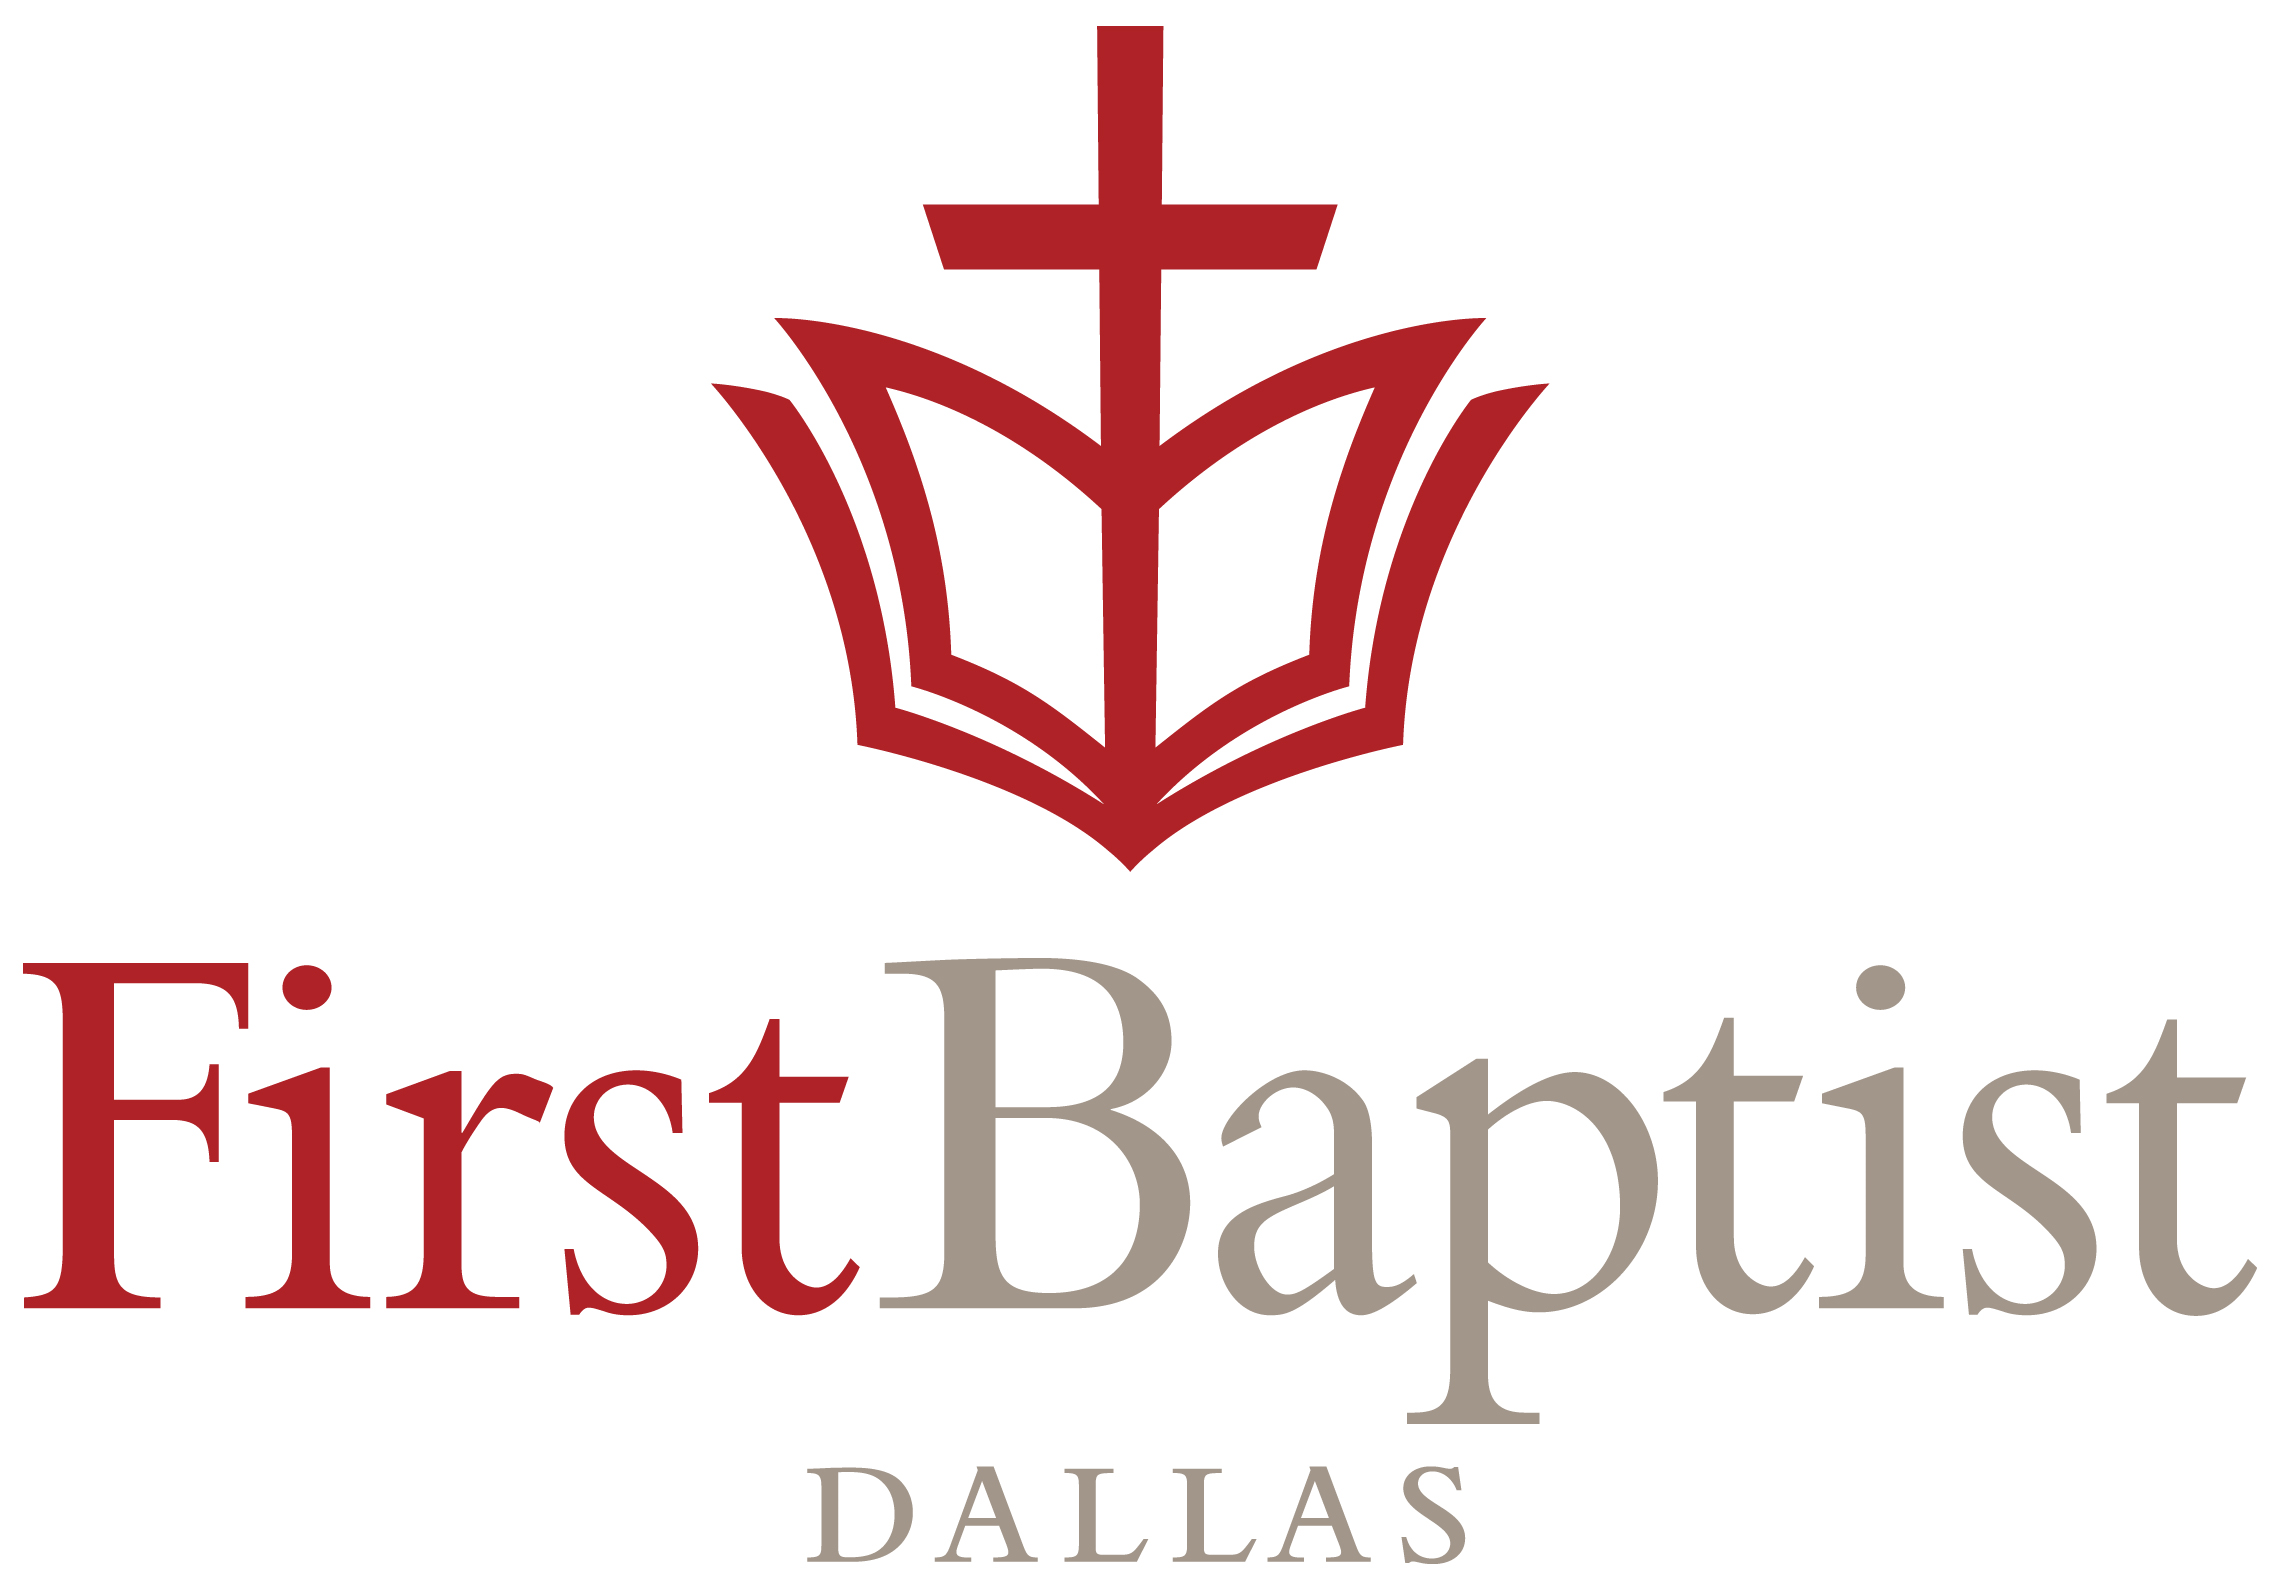 First Baptist Church of Dallas, Texas logo